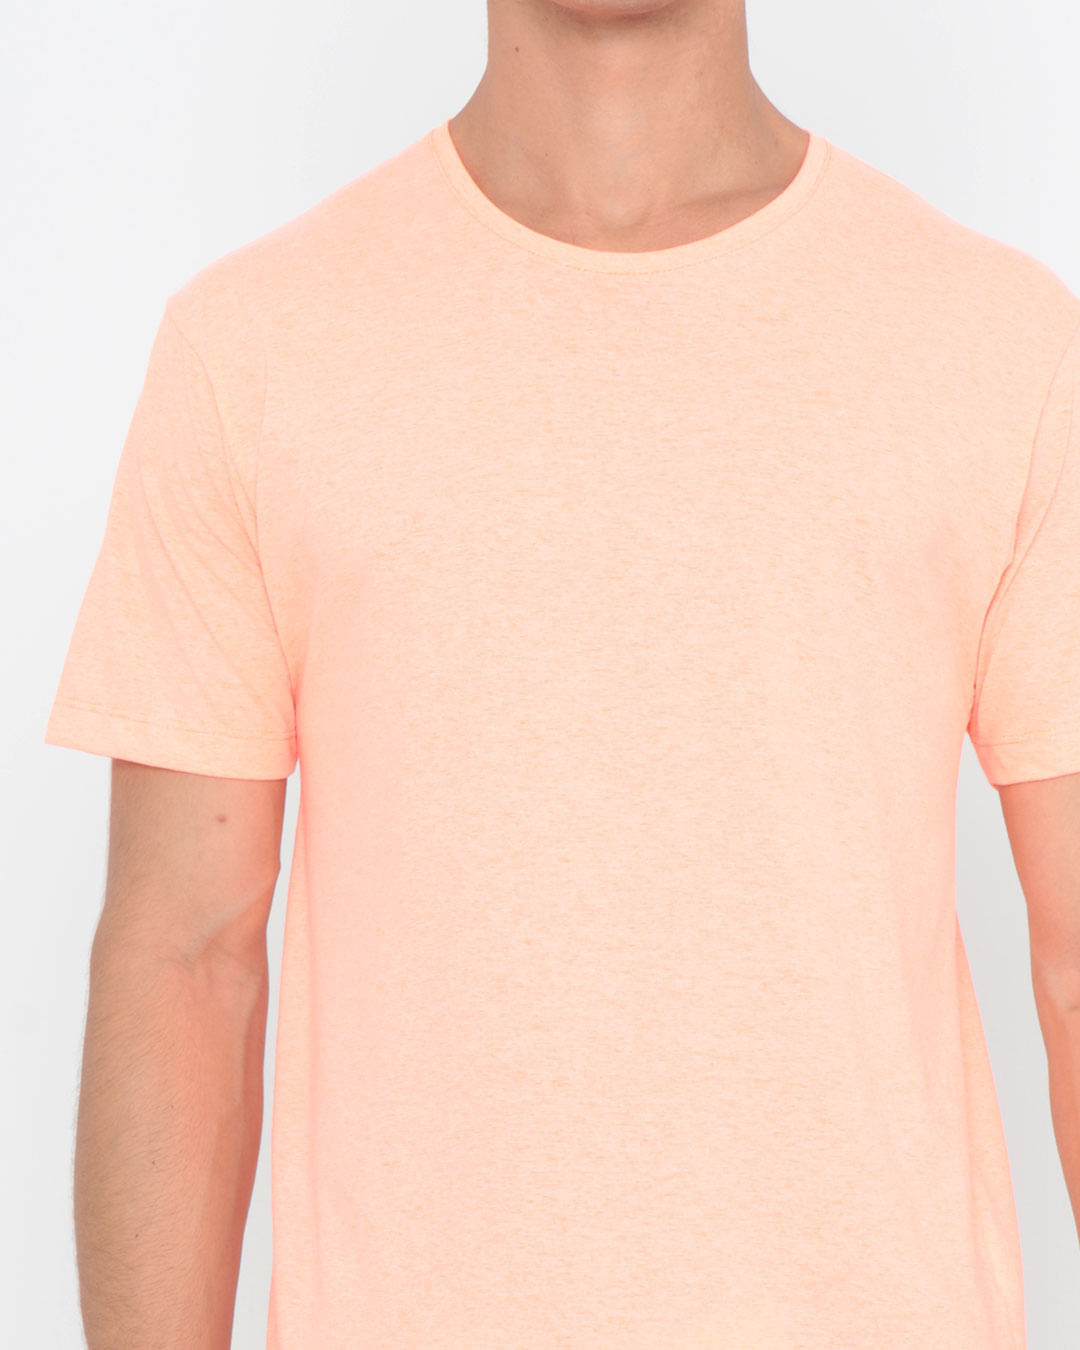 Camiseta-Basica-Lisa-Neon-Laranja